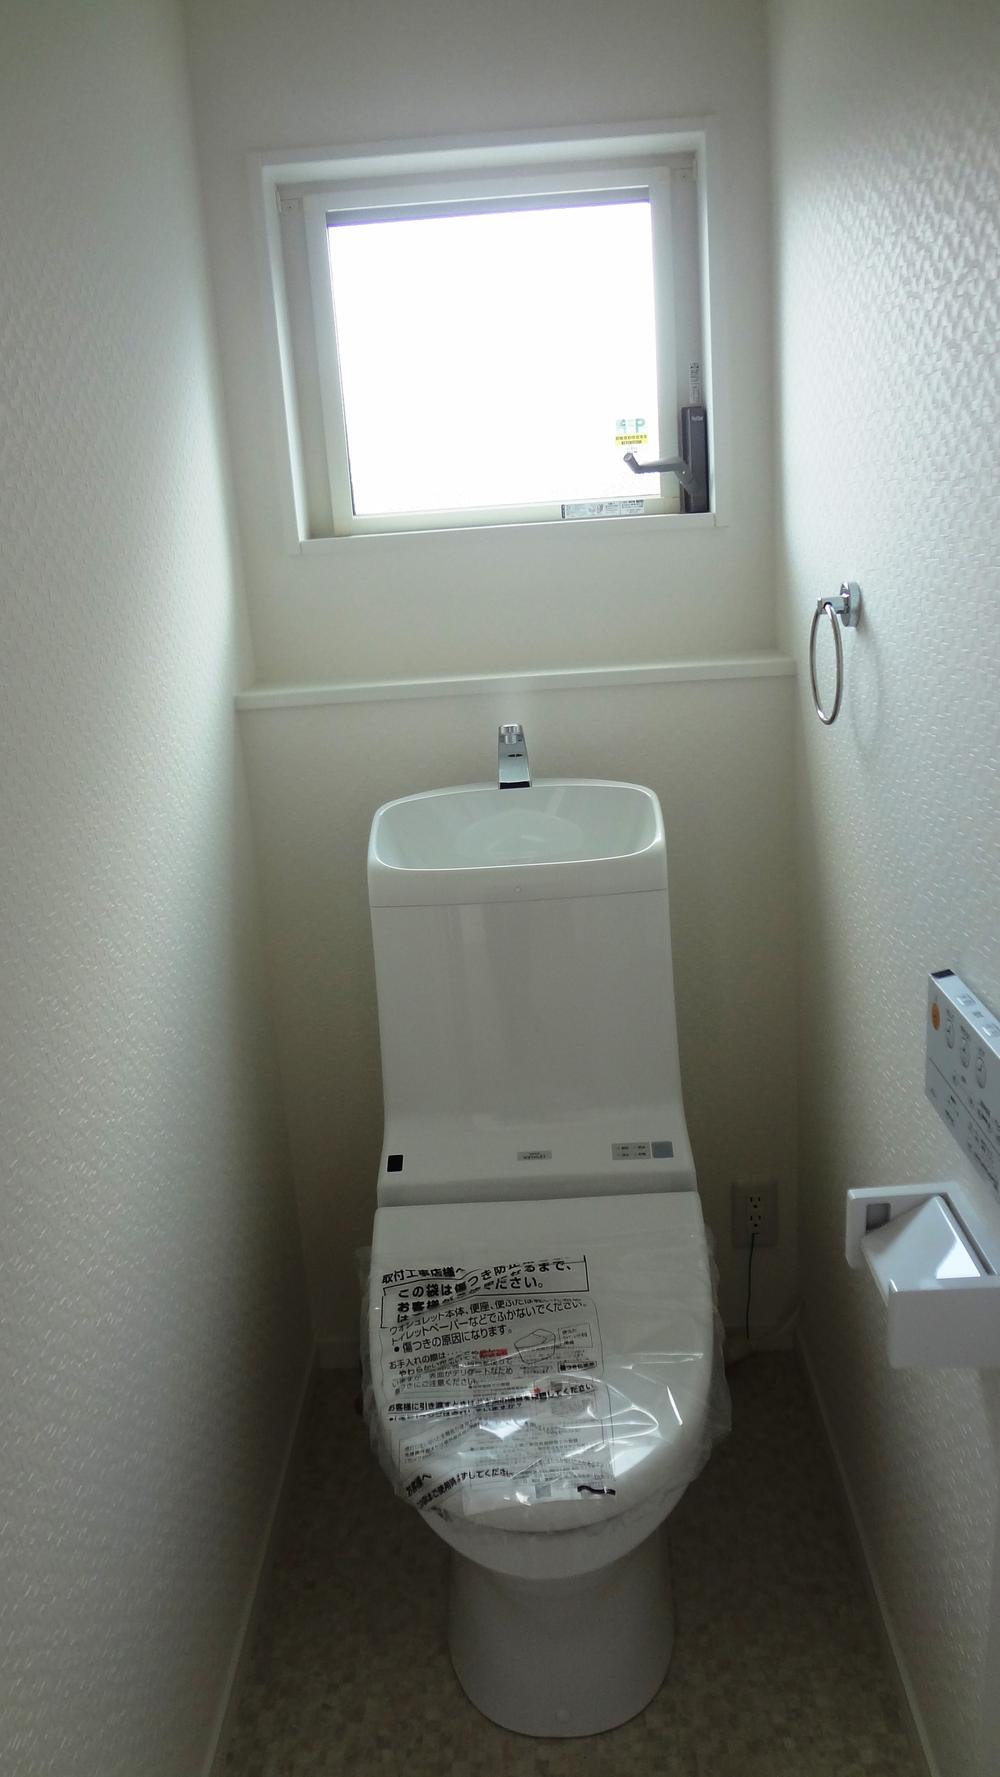 Toilet. Simple high-function toilet